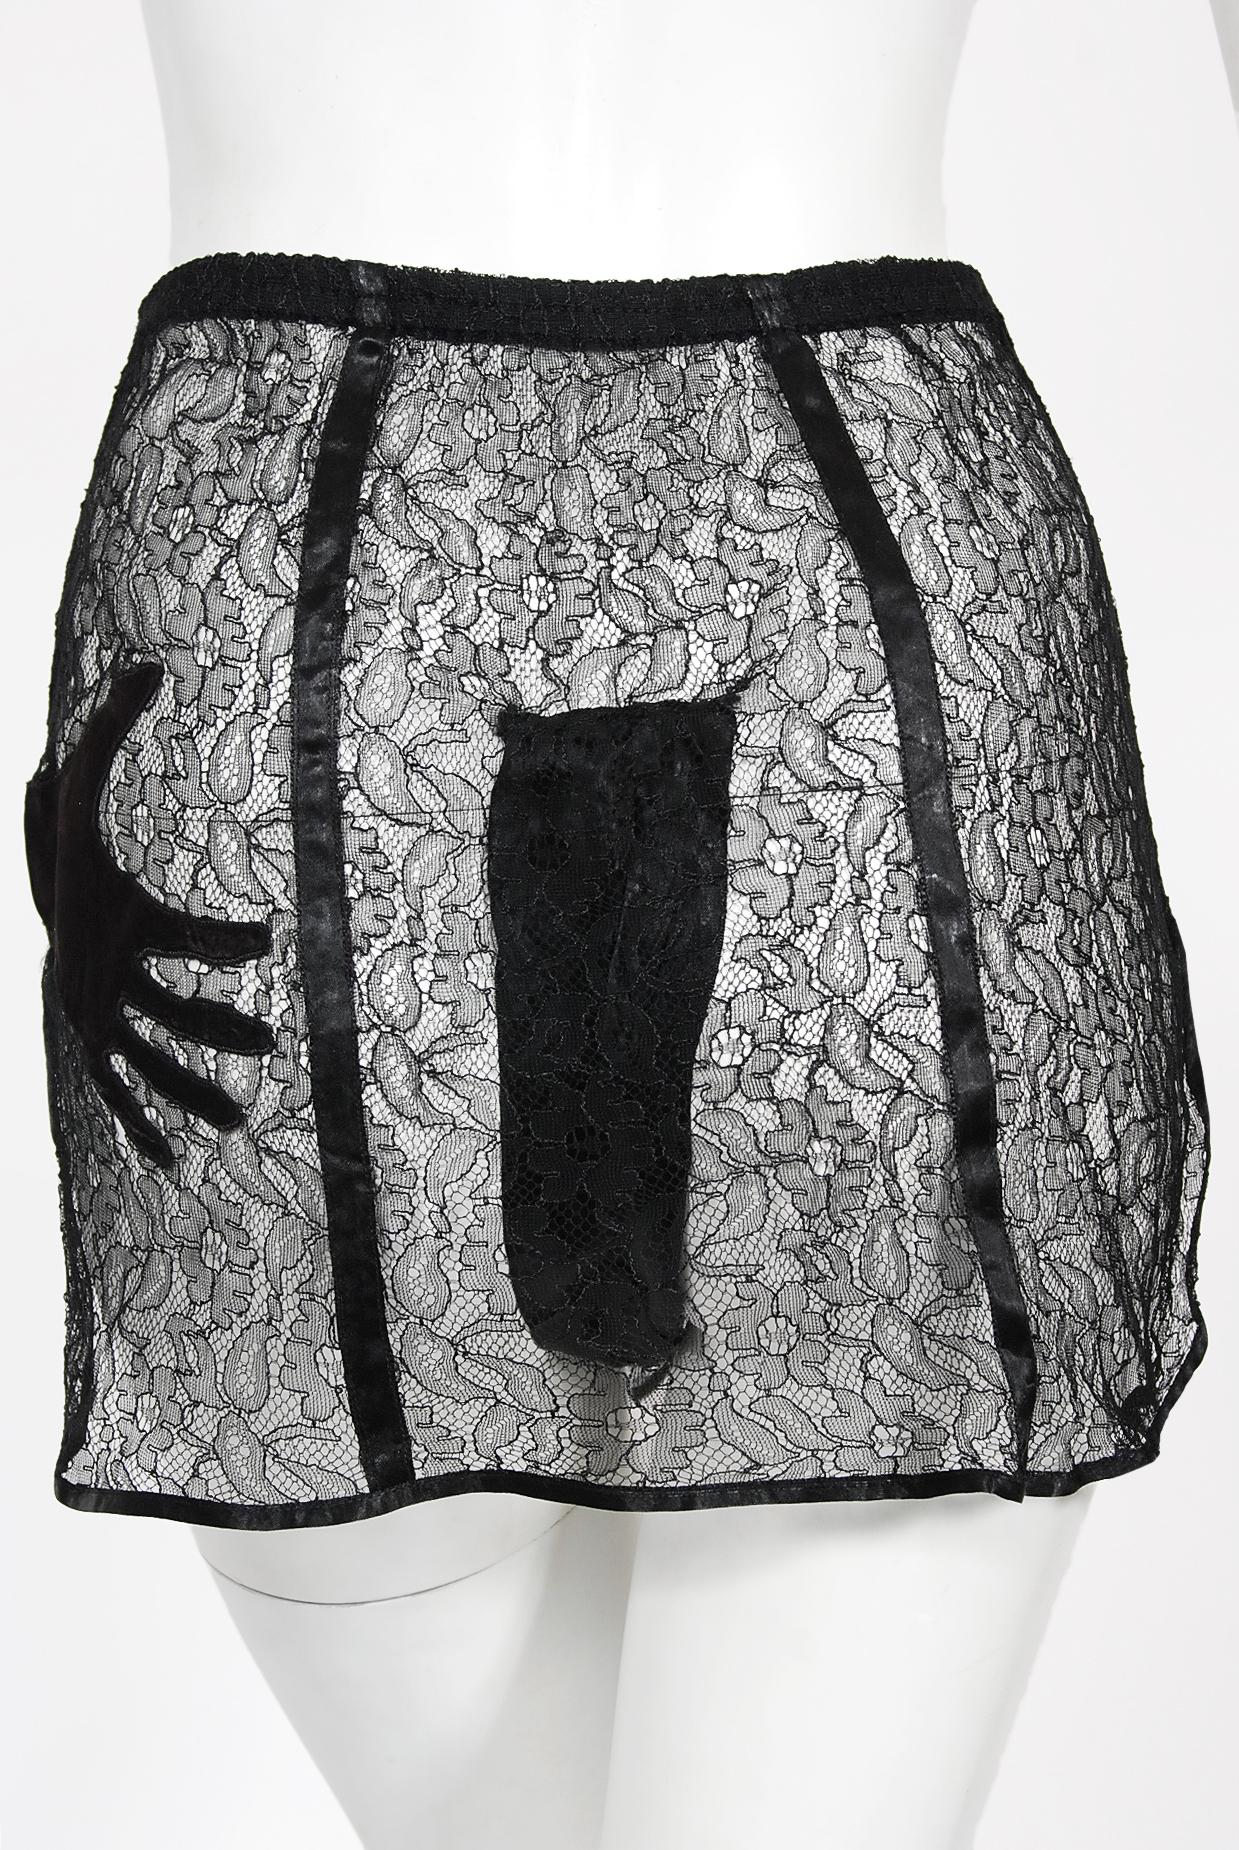 Vintage 1940's Schiaparelli Inspired 'Hands On' Silk Appliqué Lace Bra & Panties 6